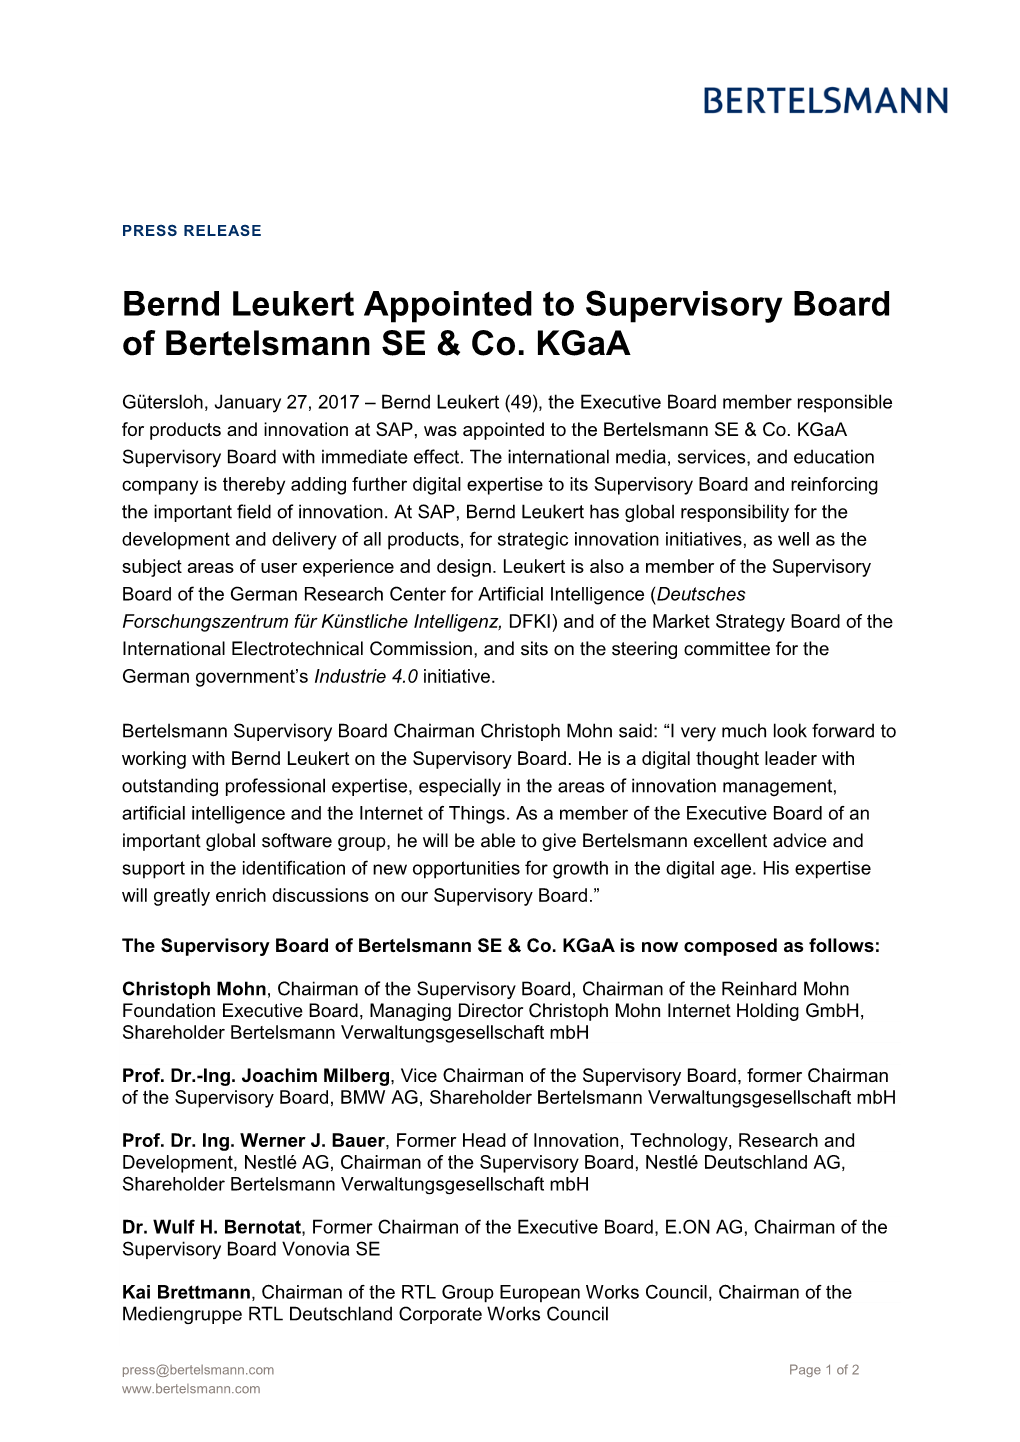 Bernd Leukert Appointed to Supervisory Board of Bertelsmann SE & Co